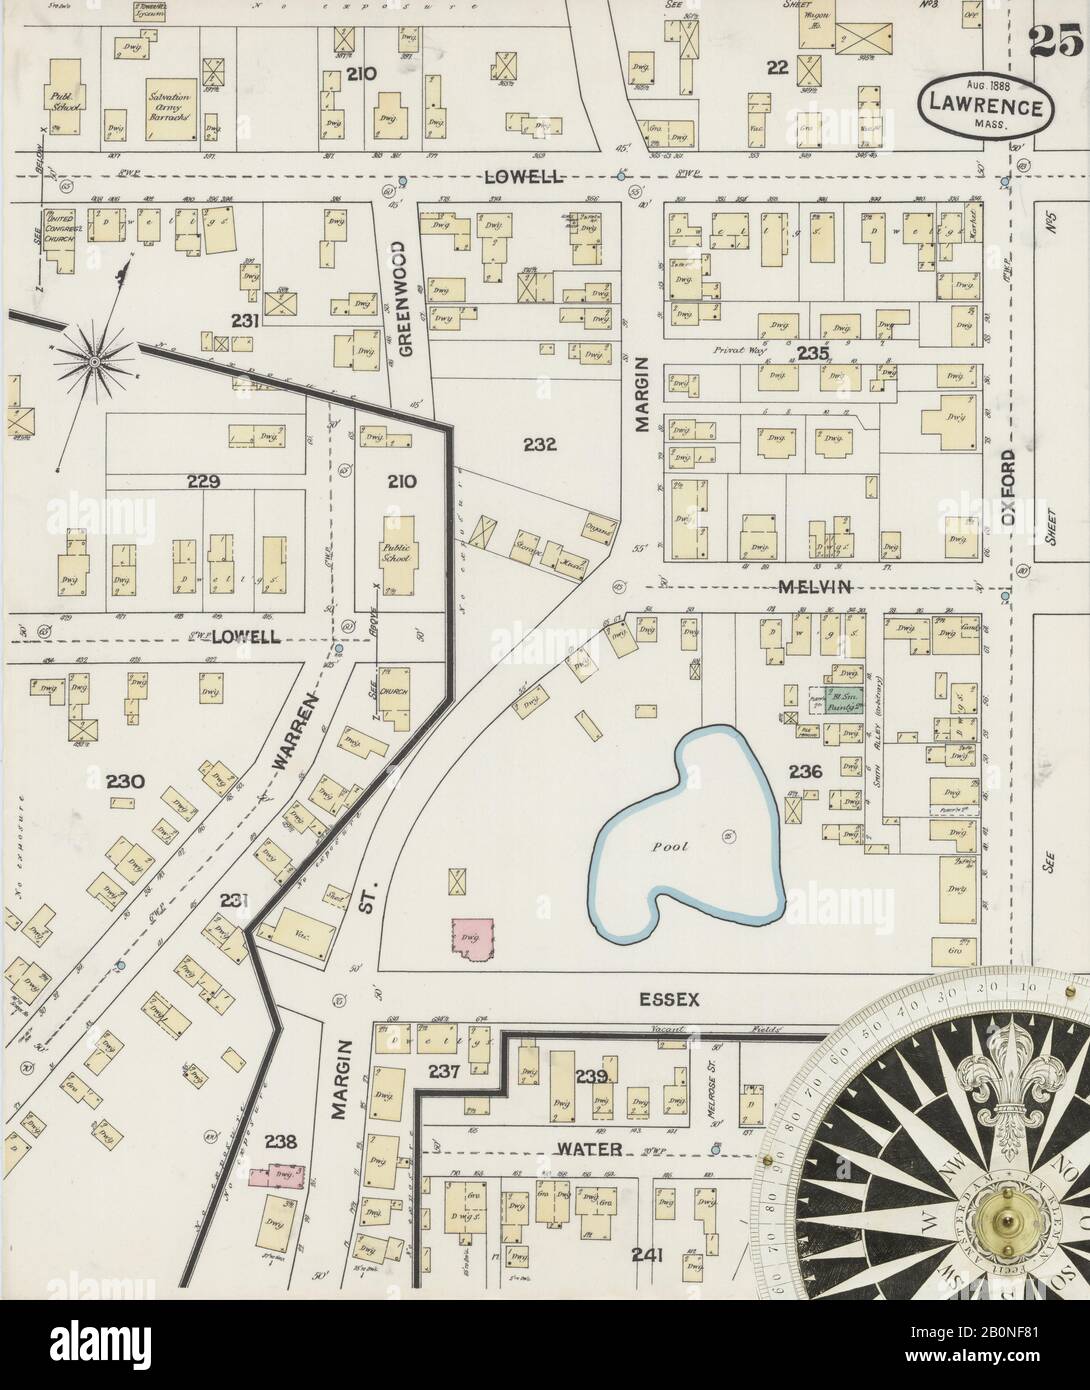 Imagen 25 De Sanborn Fire Insurance Map De Lawrence, Condado De Essex, Massachusetts. Ago 1888. 27 Hoja(s), América, mapa de calles con una brújula del siglo Xix Foto de stock